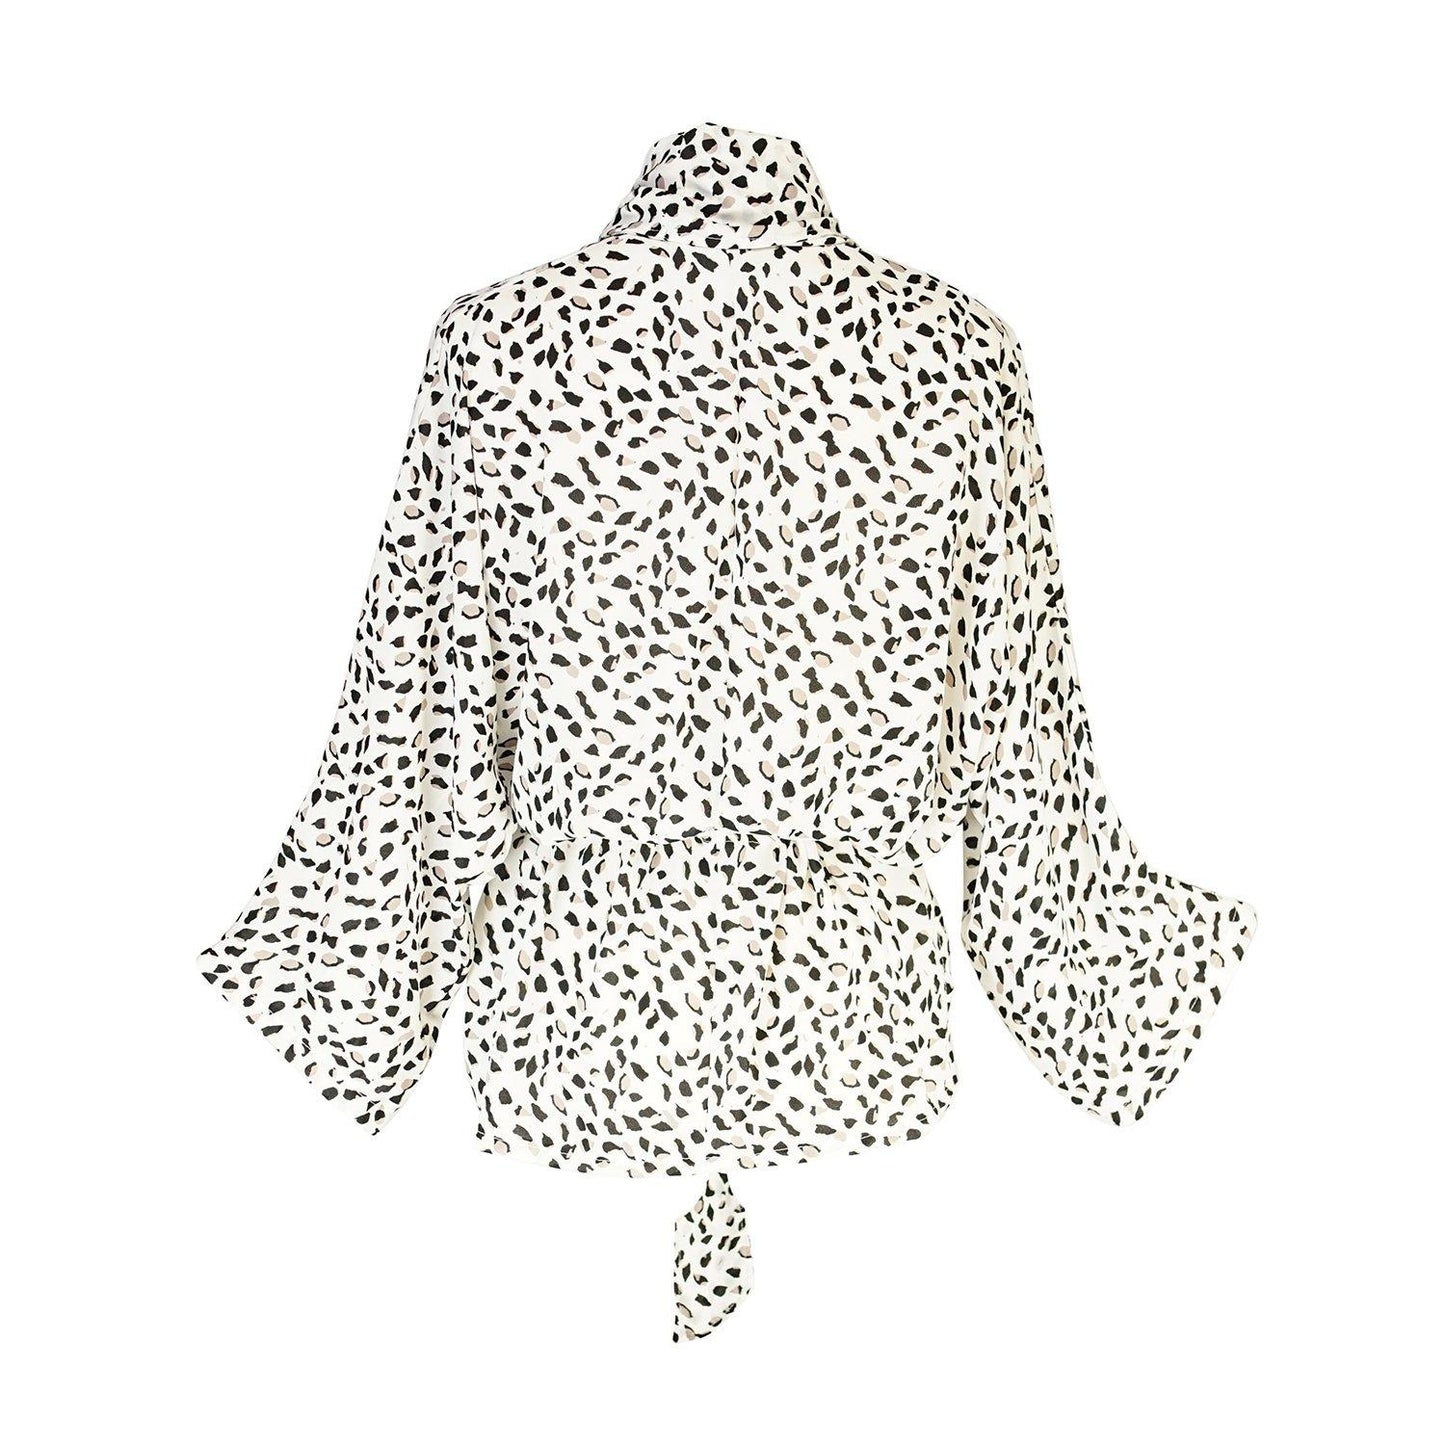 jennafer grace dolman wrap kimono top semi sheer snow leopard animal print ivory white black dots blouse shirt rocker chic glam rock cocktail party boho bohemian unisex handmade